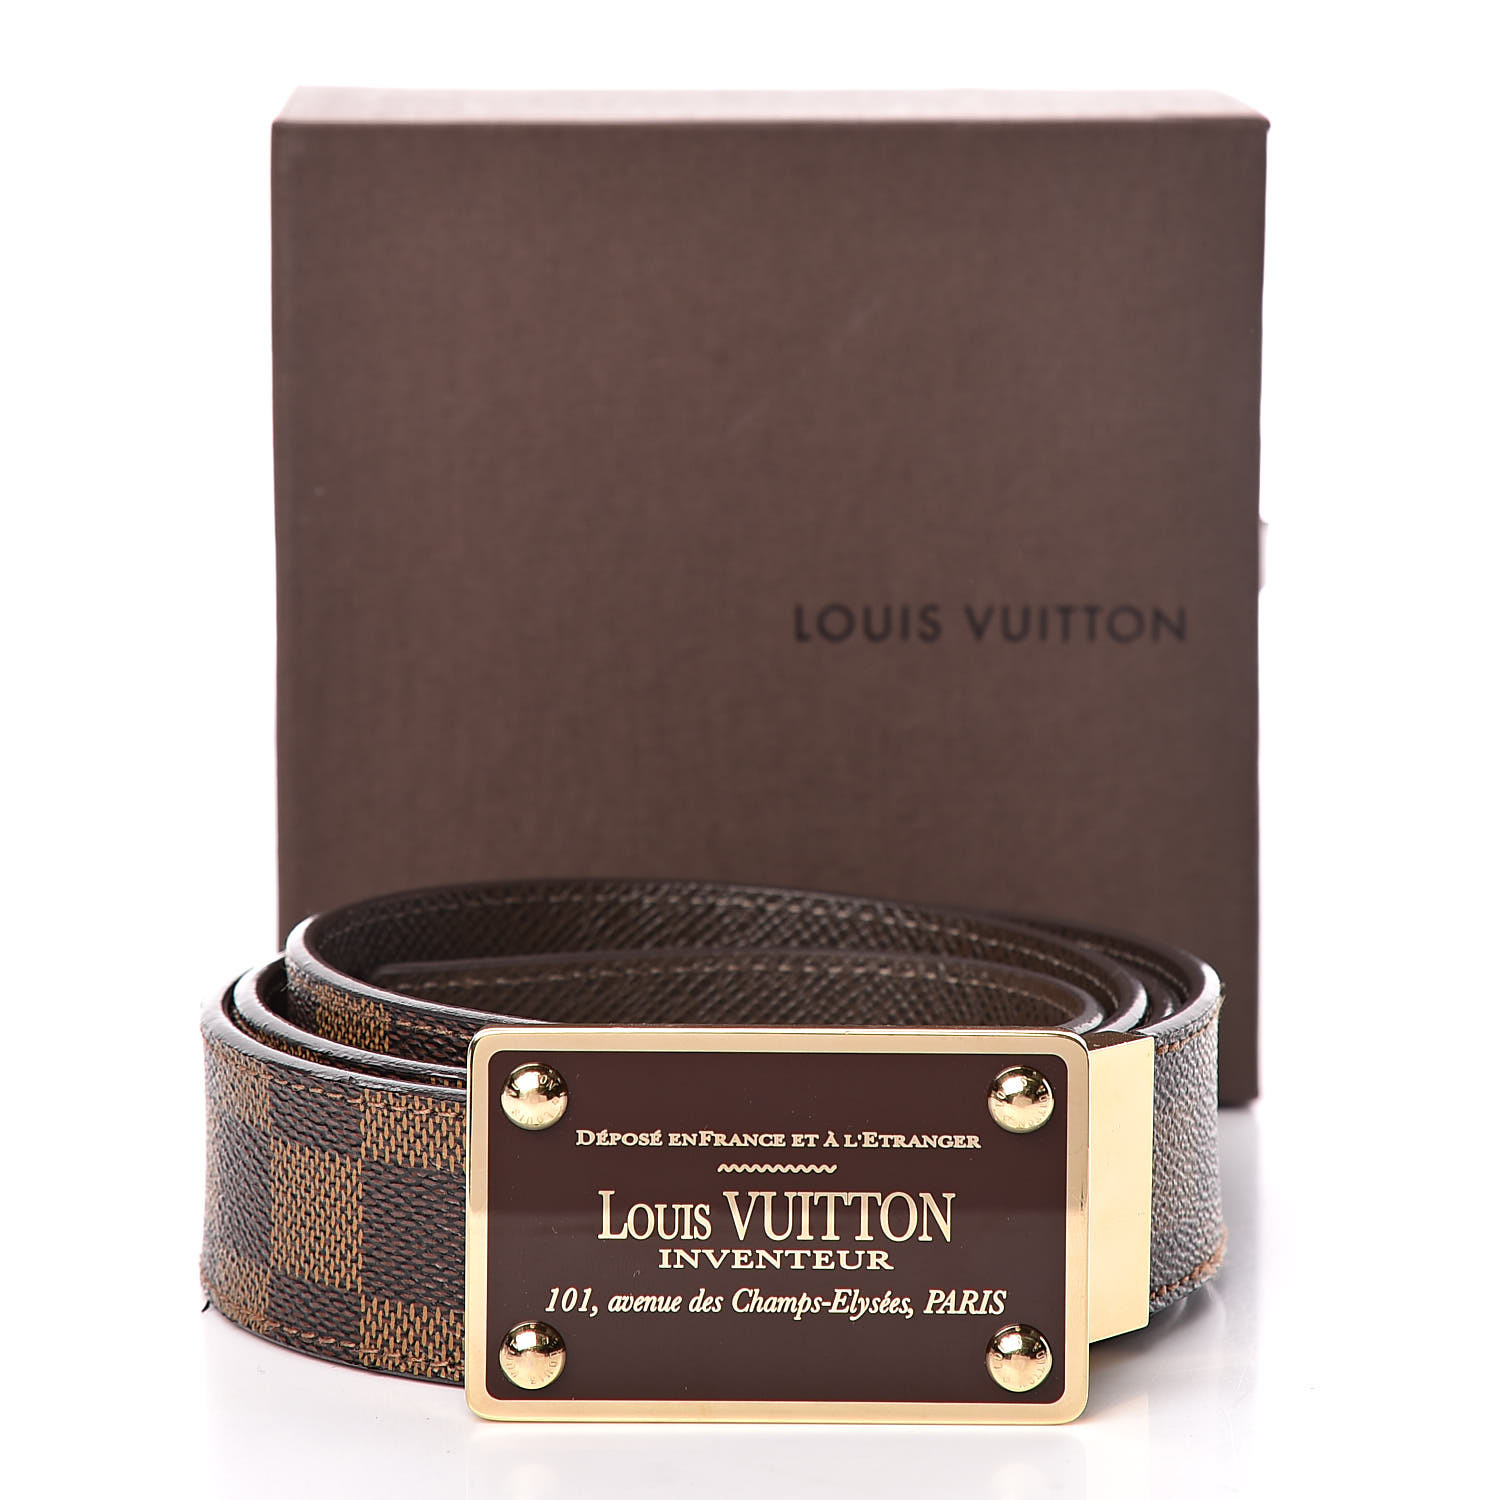 LOUIS VUITTON Calfskin 40mm LV Optic Reversible Belt 100 40 Black